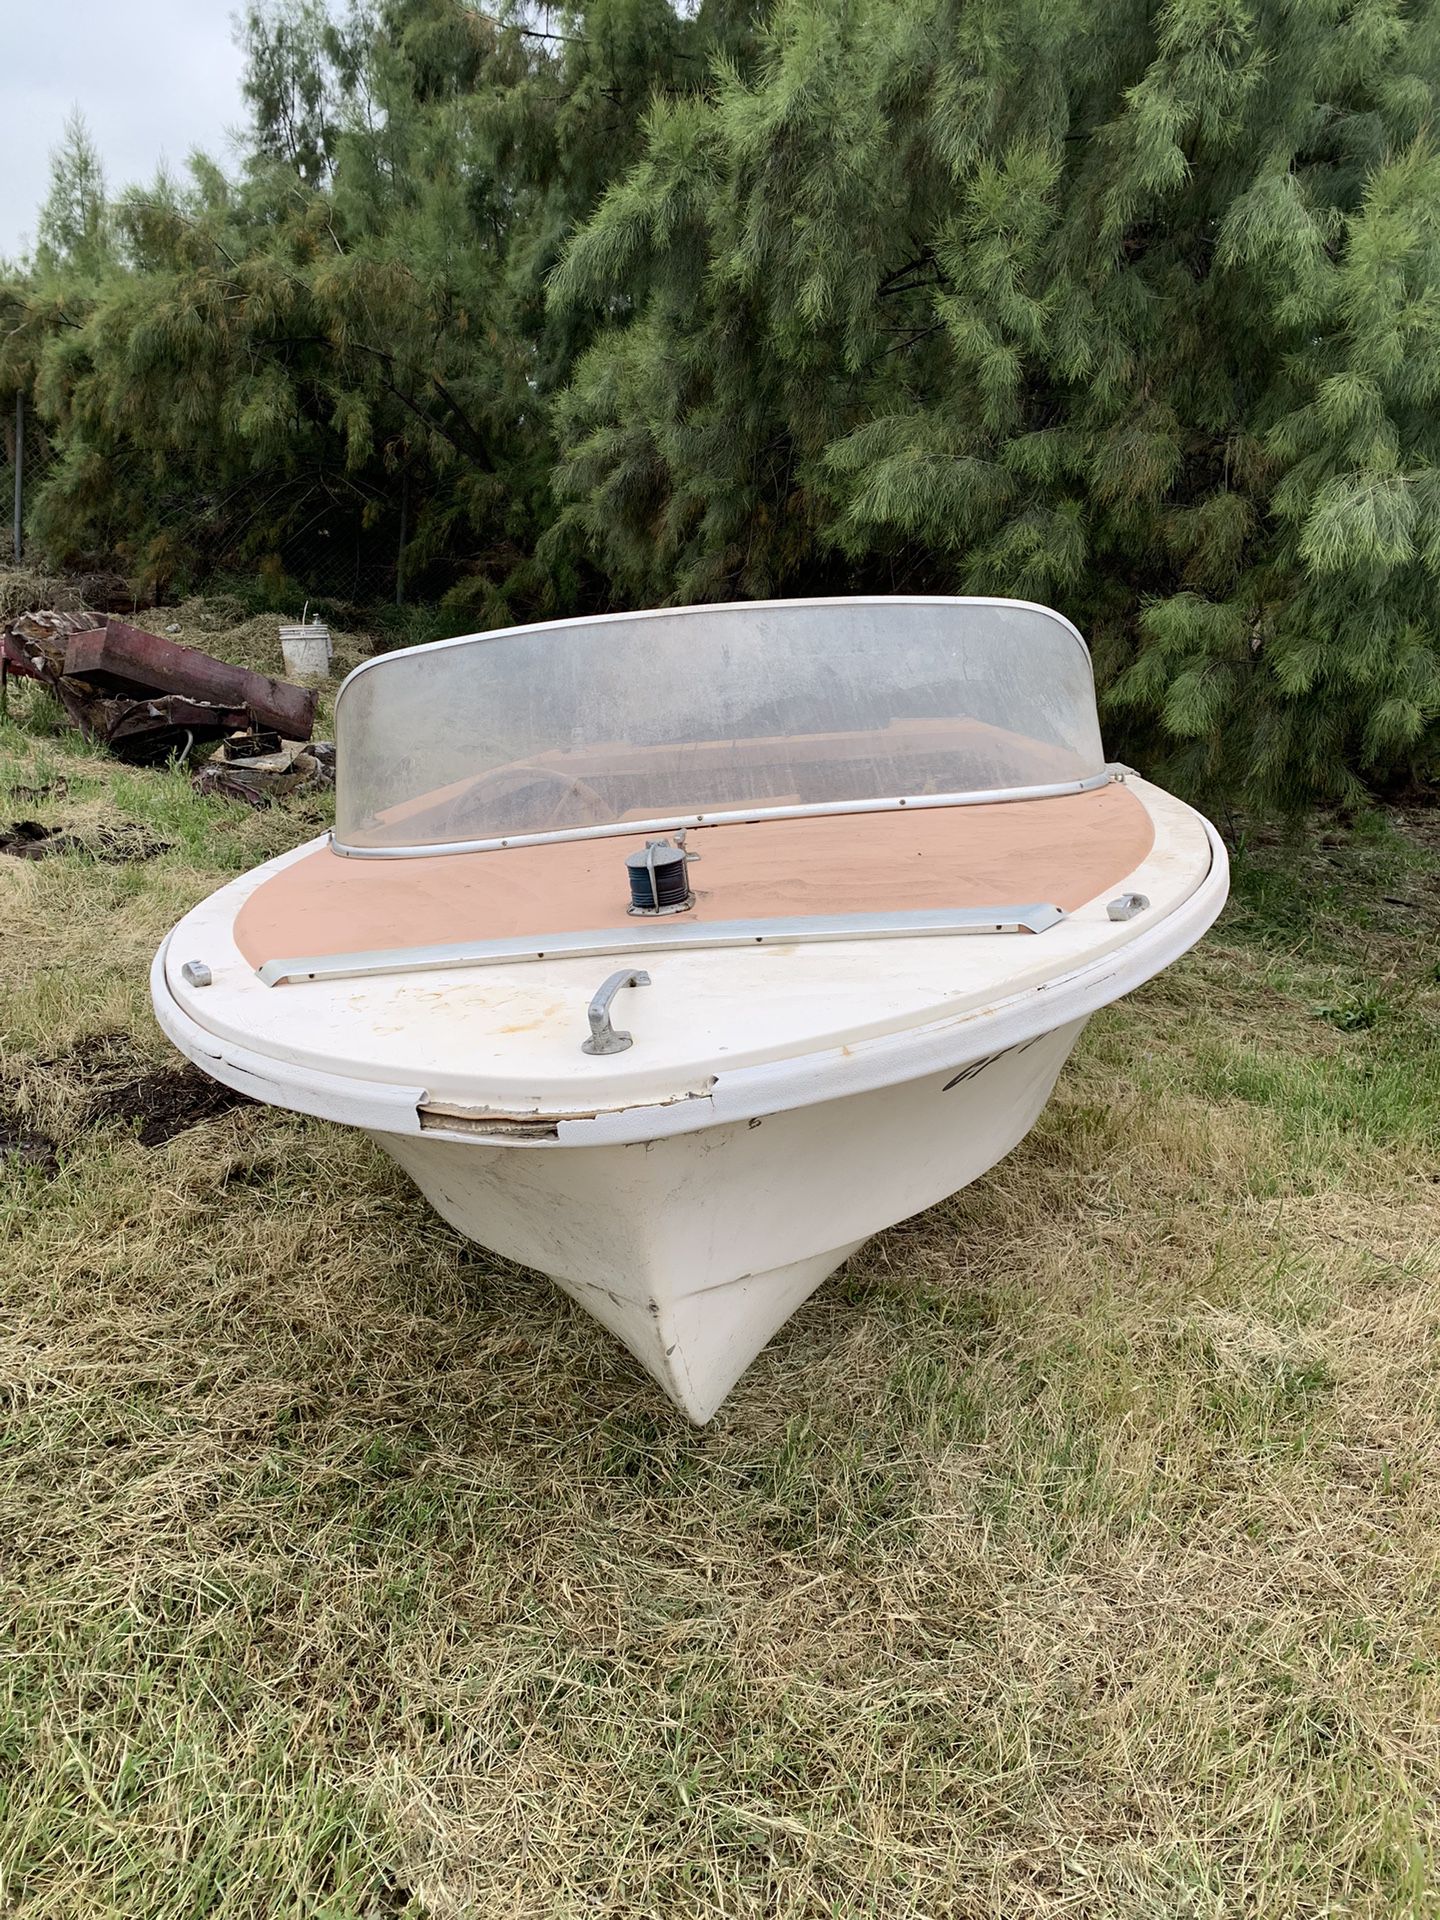 Free Classic Boat